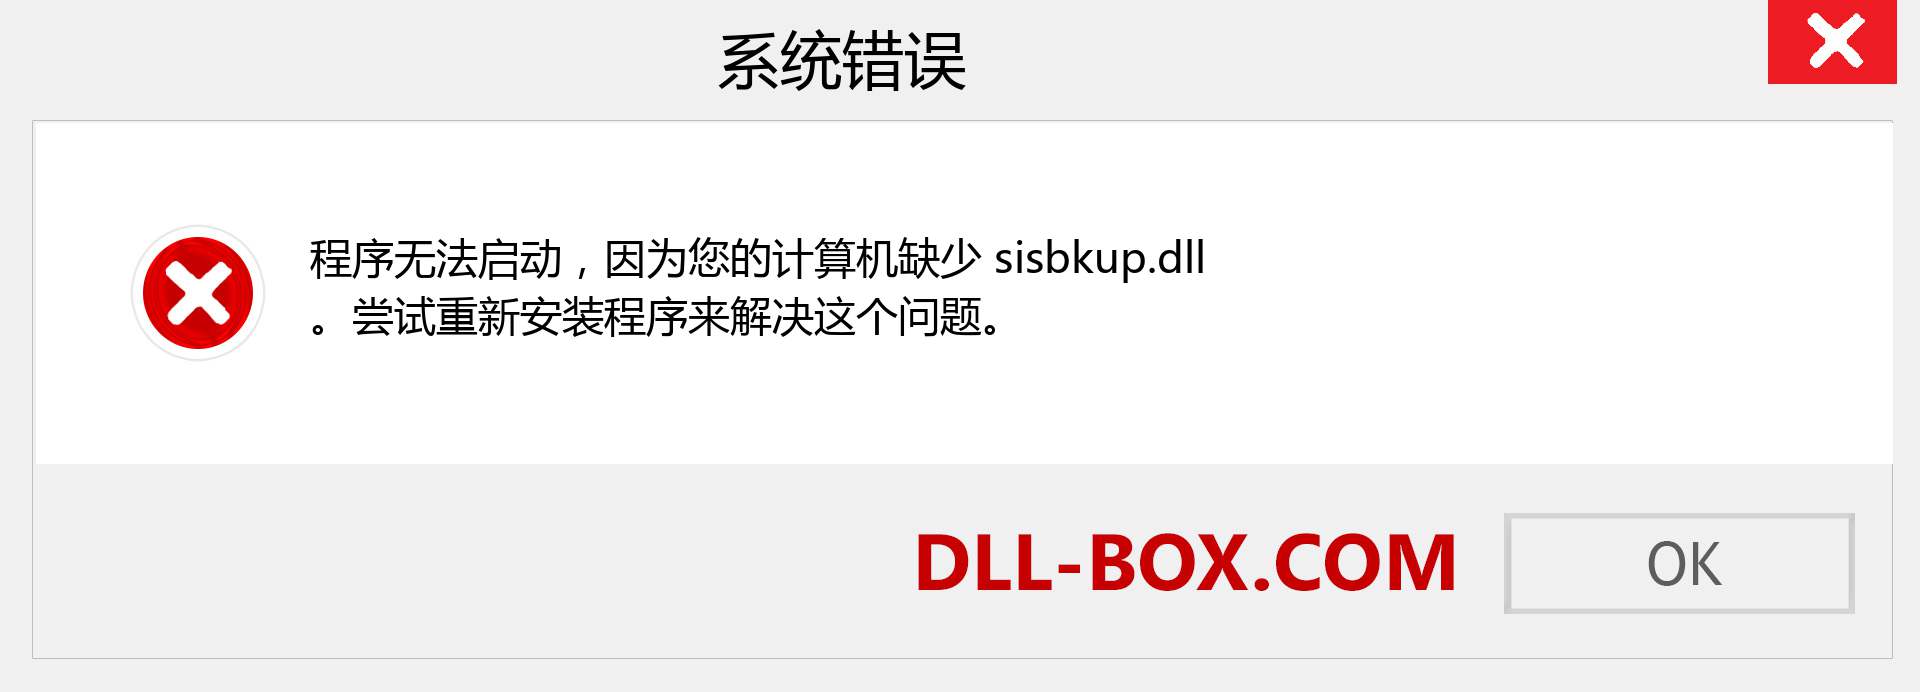 sisbkup.dll 文件丢失？。 适用于 Windows 7、8、10 的下载 - 修复 Windows、照片、图像上的 sisbkup dll 丢失错误